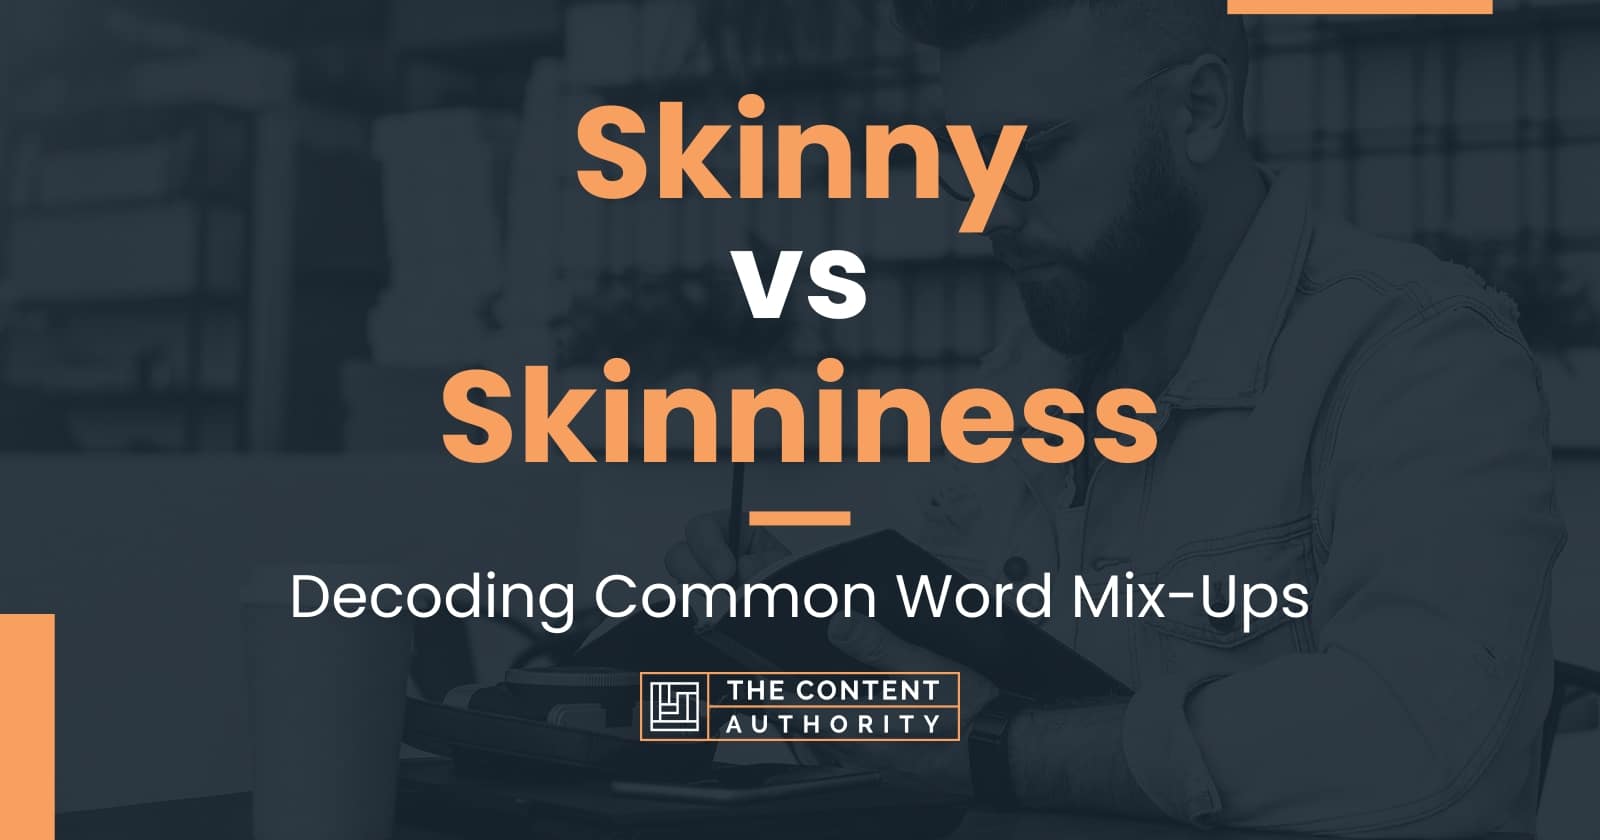 Skinny vs Skinniness: Decoding Common Word Mix-Ups